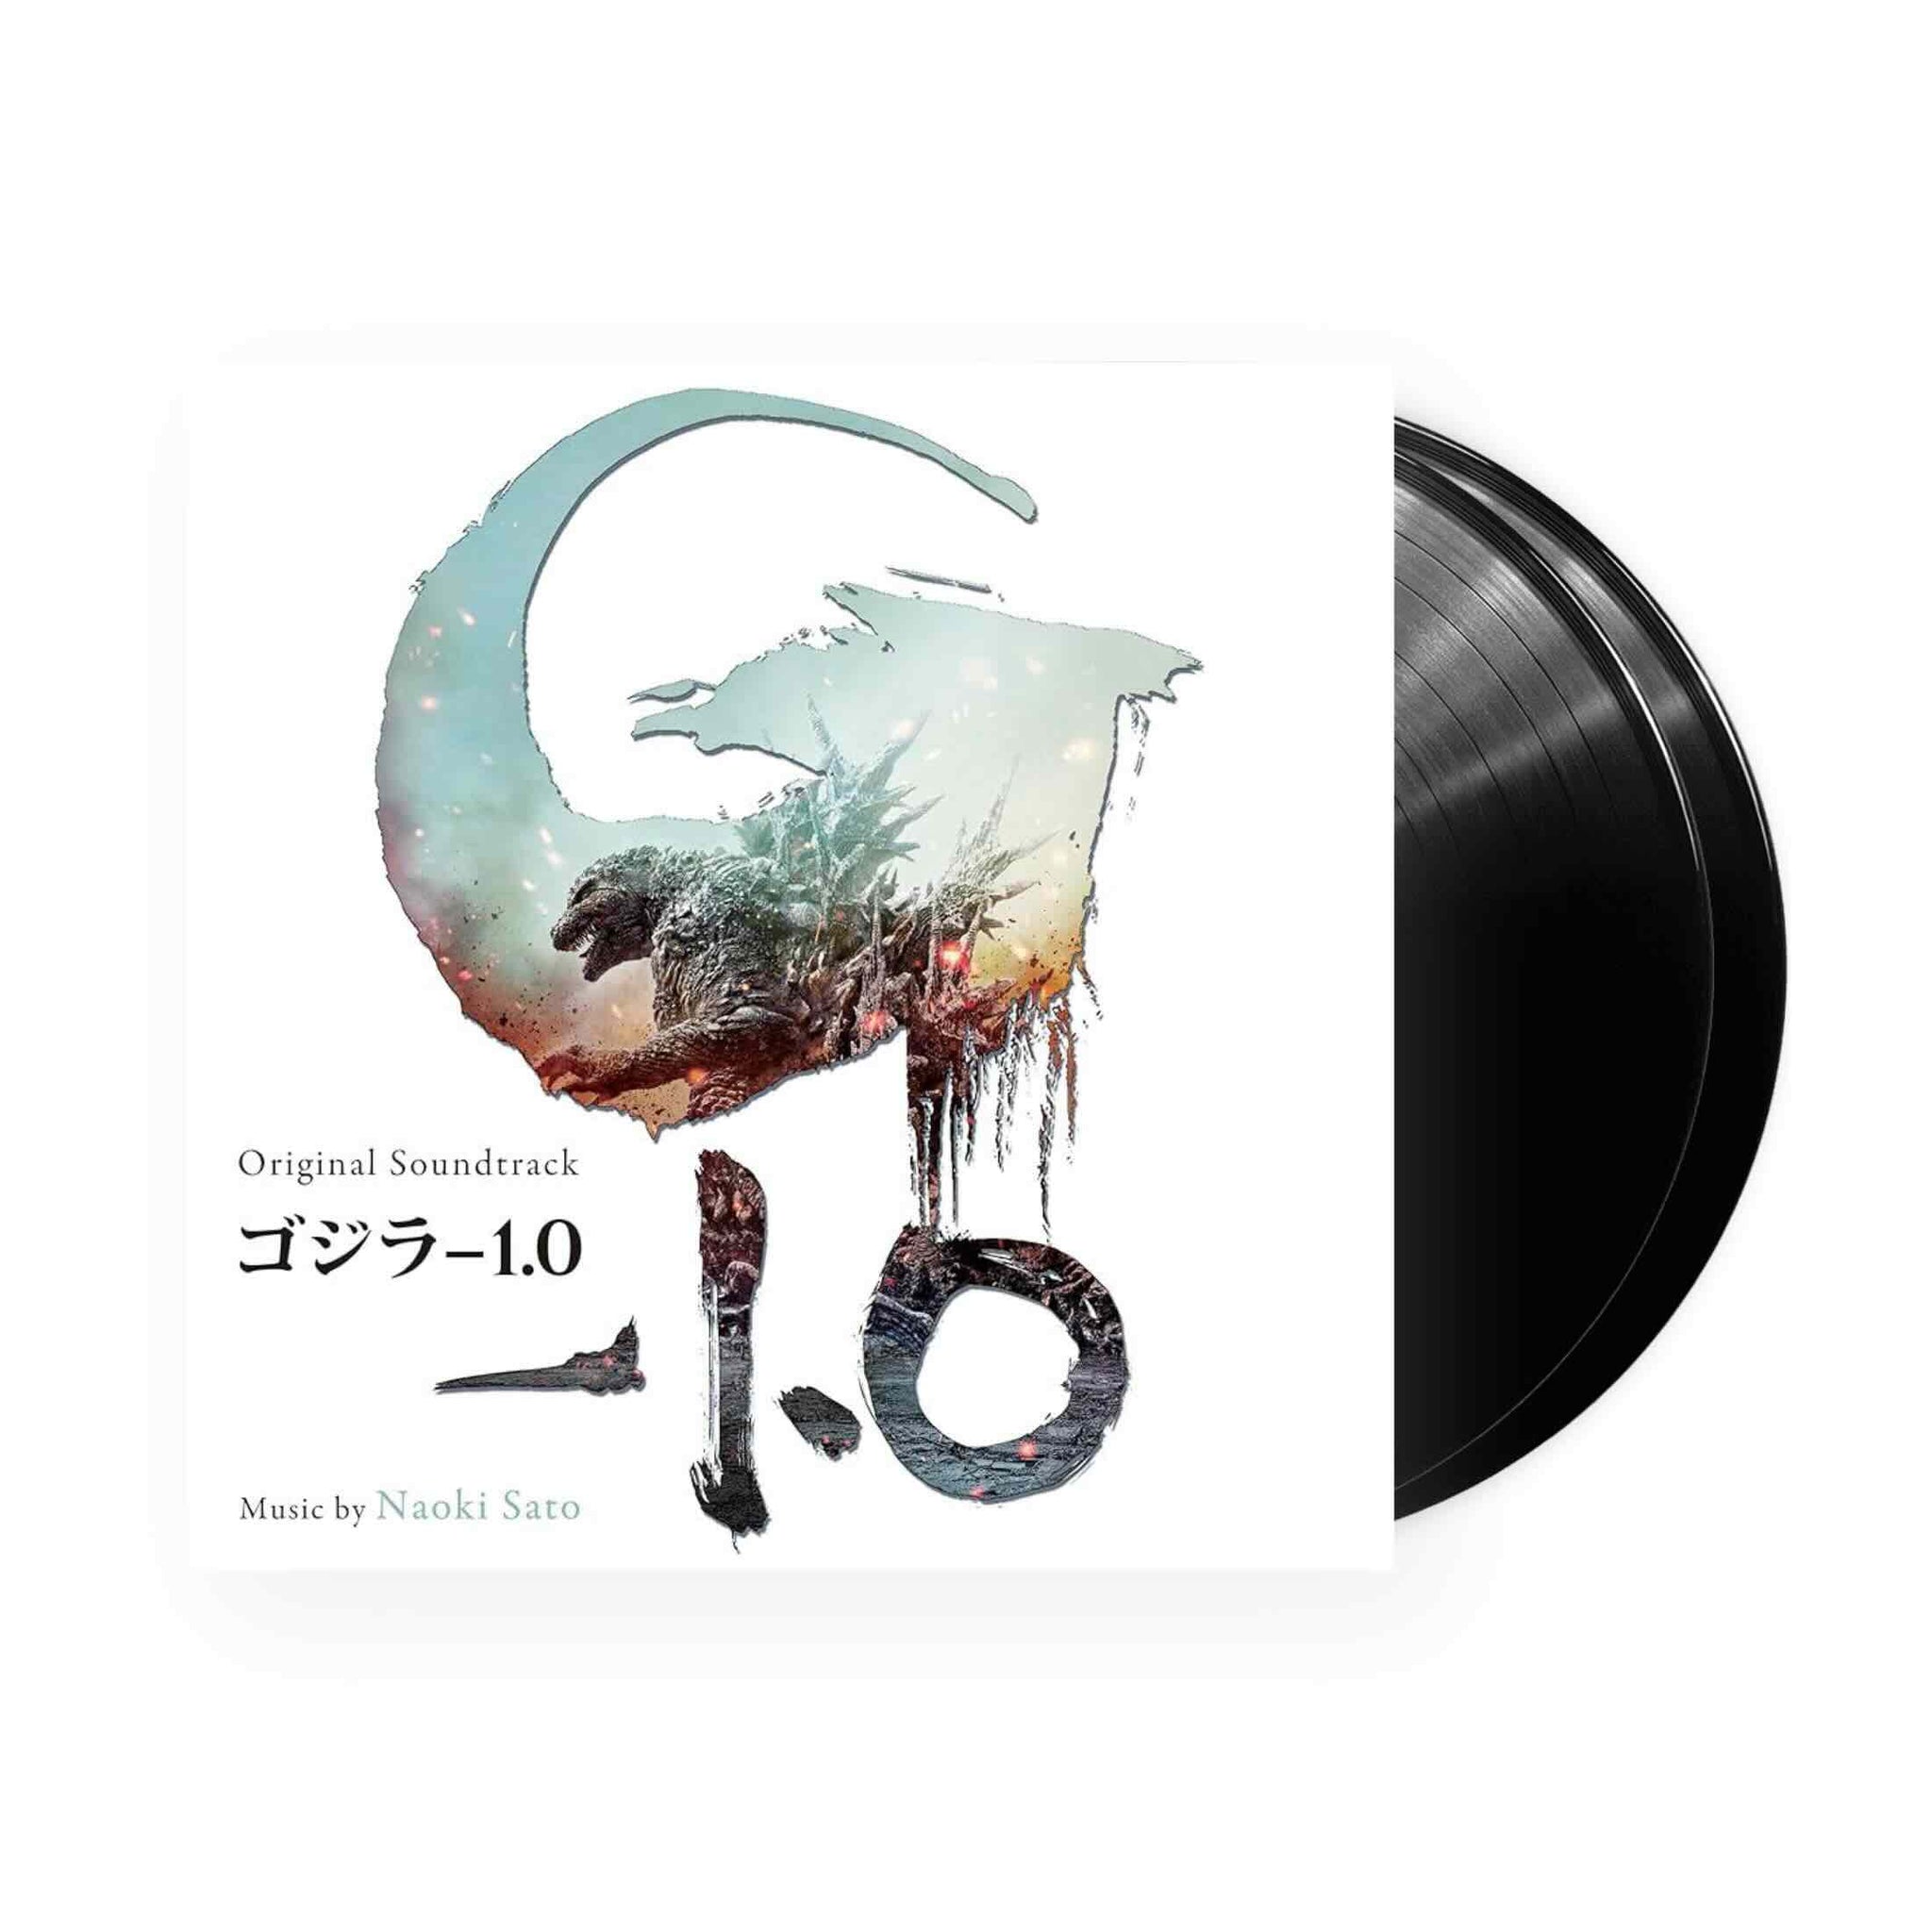 Original Soundtrack Godzilla Minus 1.0 2xLP (Black Vinyl)